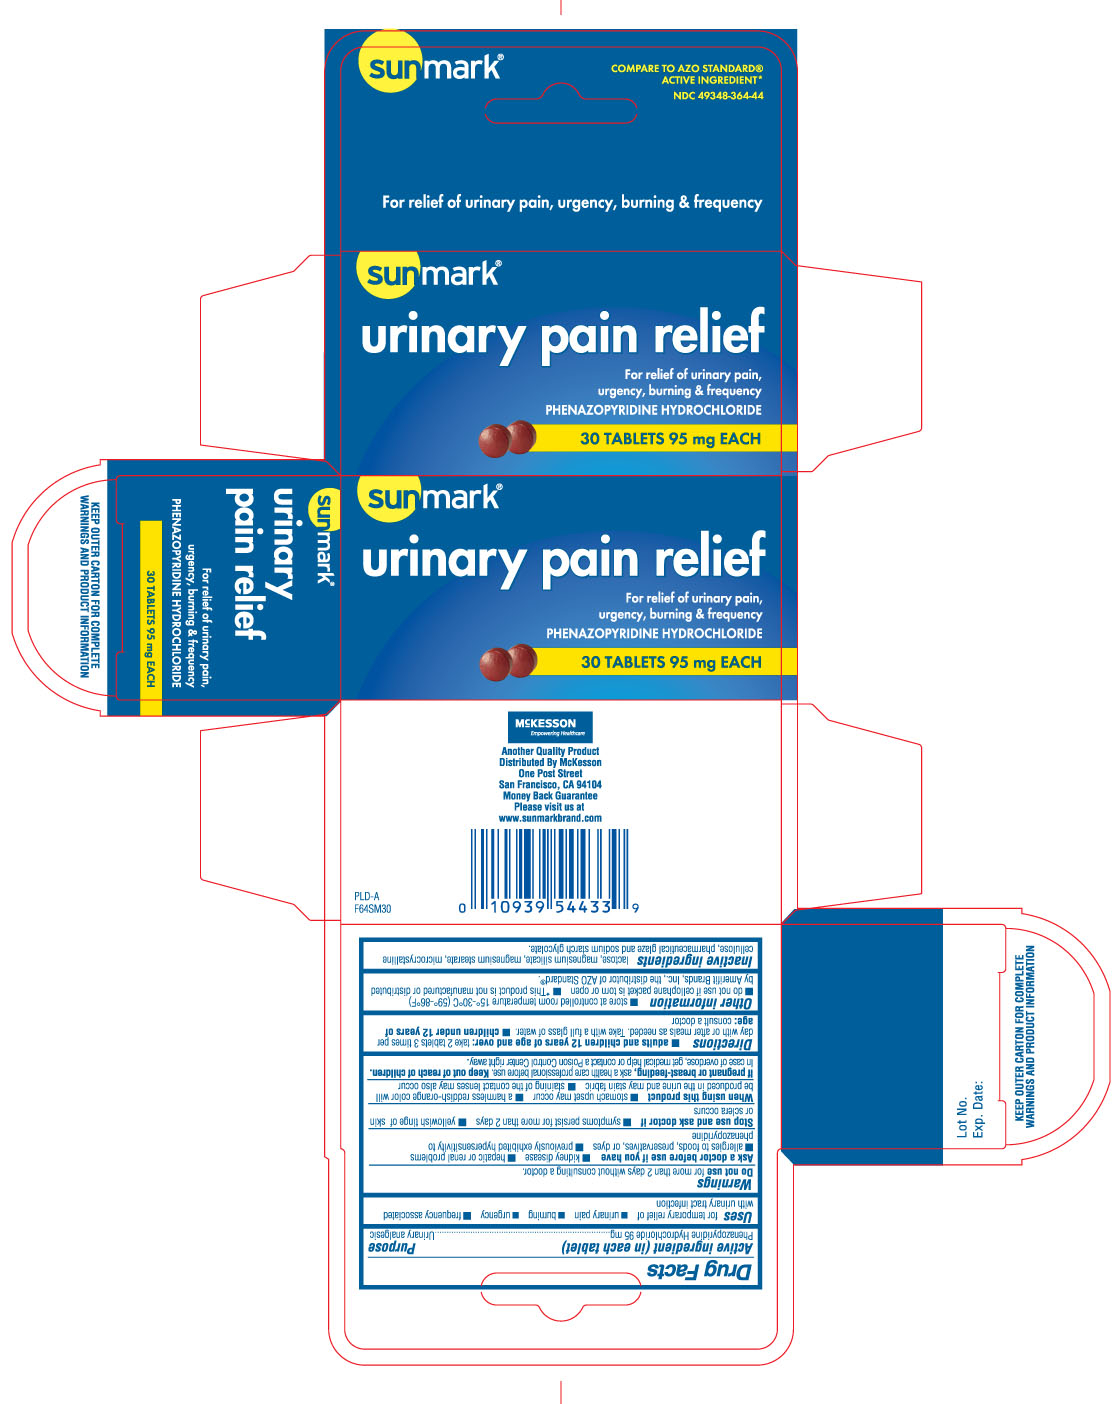 Sunmark urinary pain relief